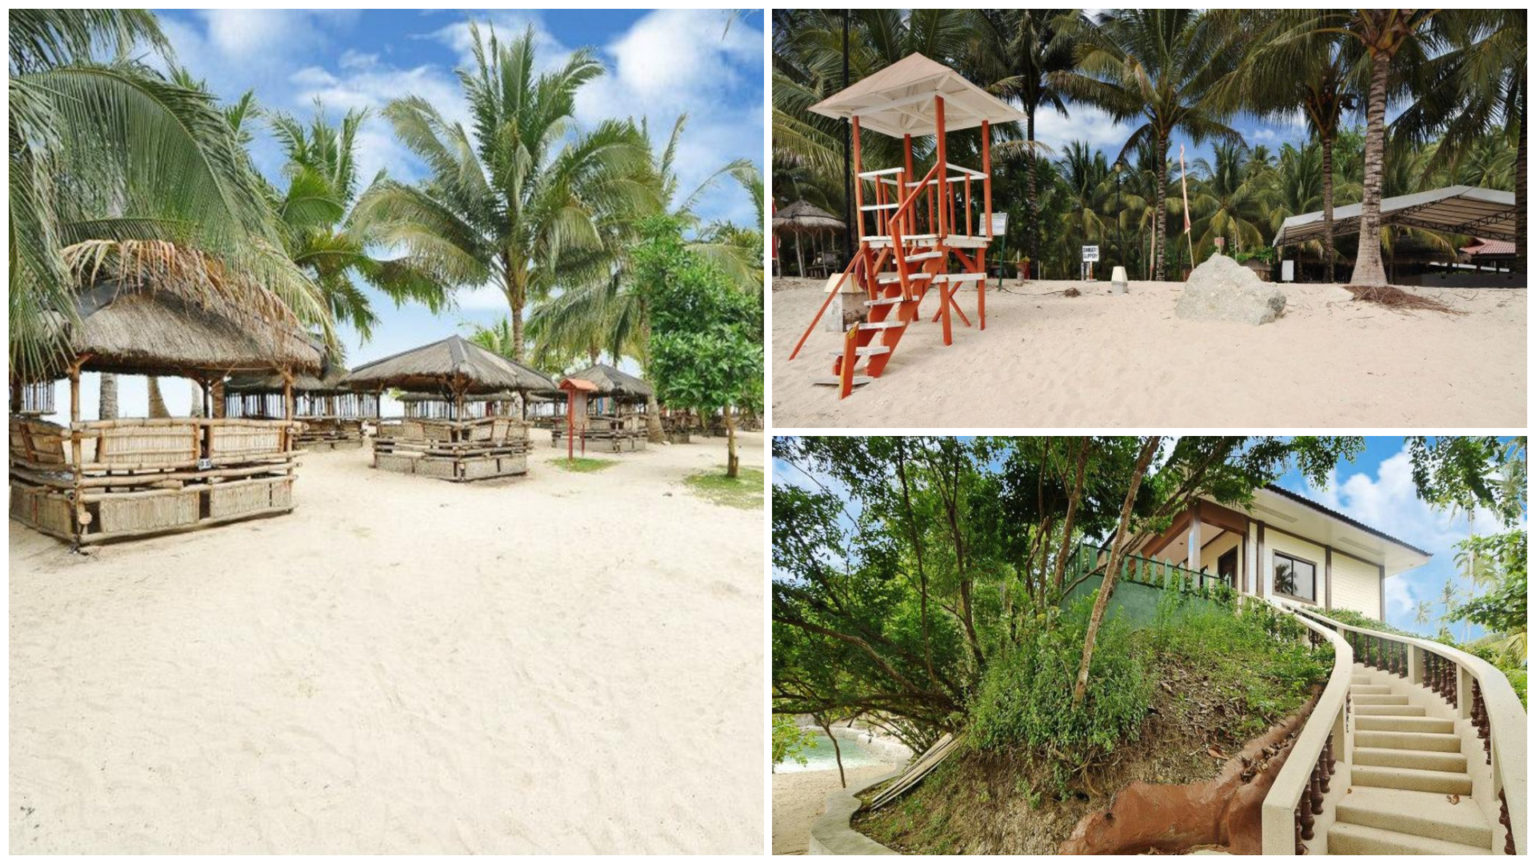 Isla Jardin Del Mar: A Popular Beach Destination in Sarangani - VisMin.ph